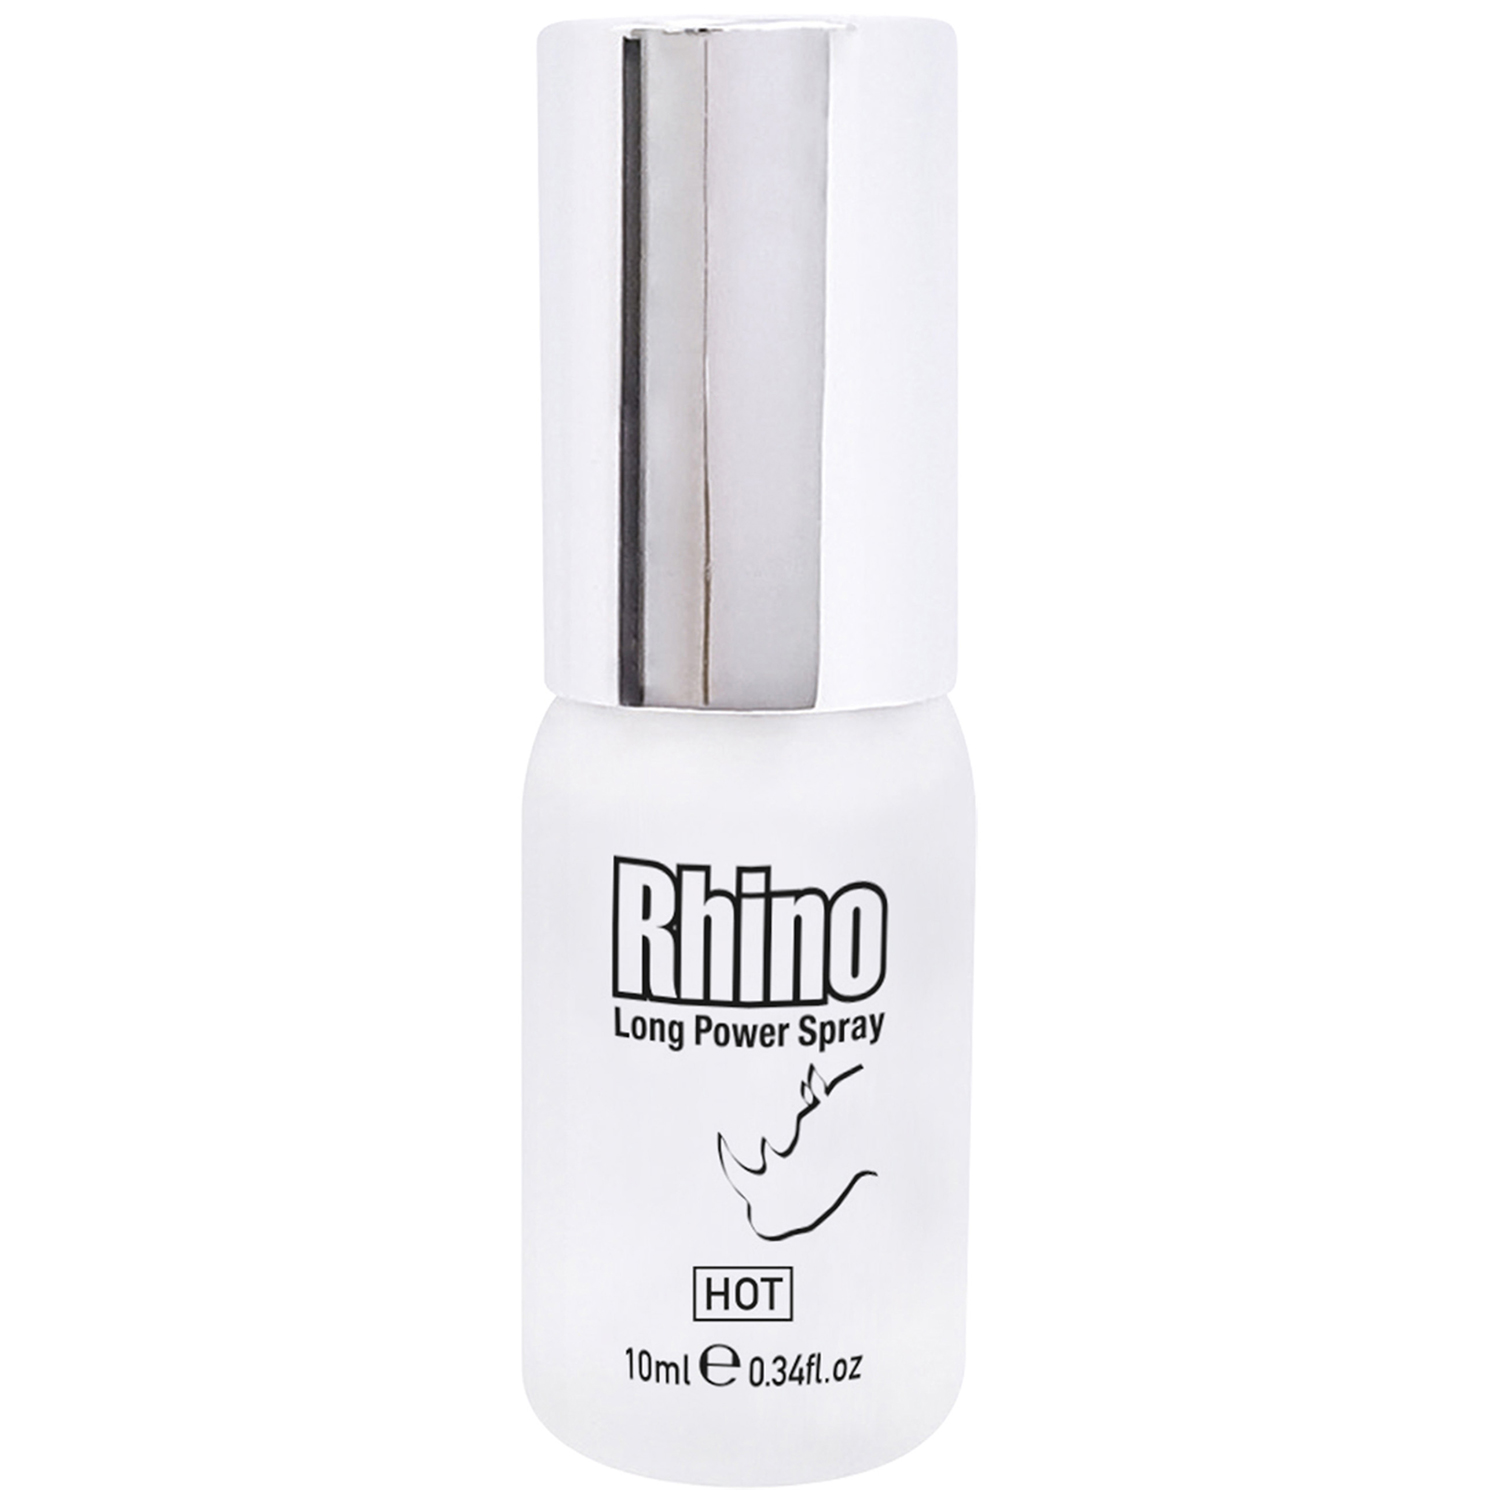 Rhino Spray Hot Long Power Spray 10 ml - Clear thumbnail